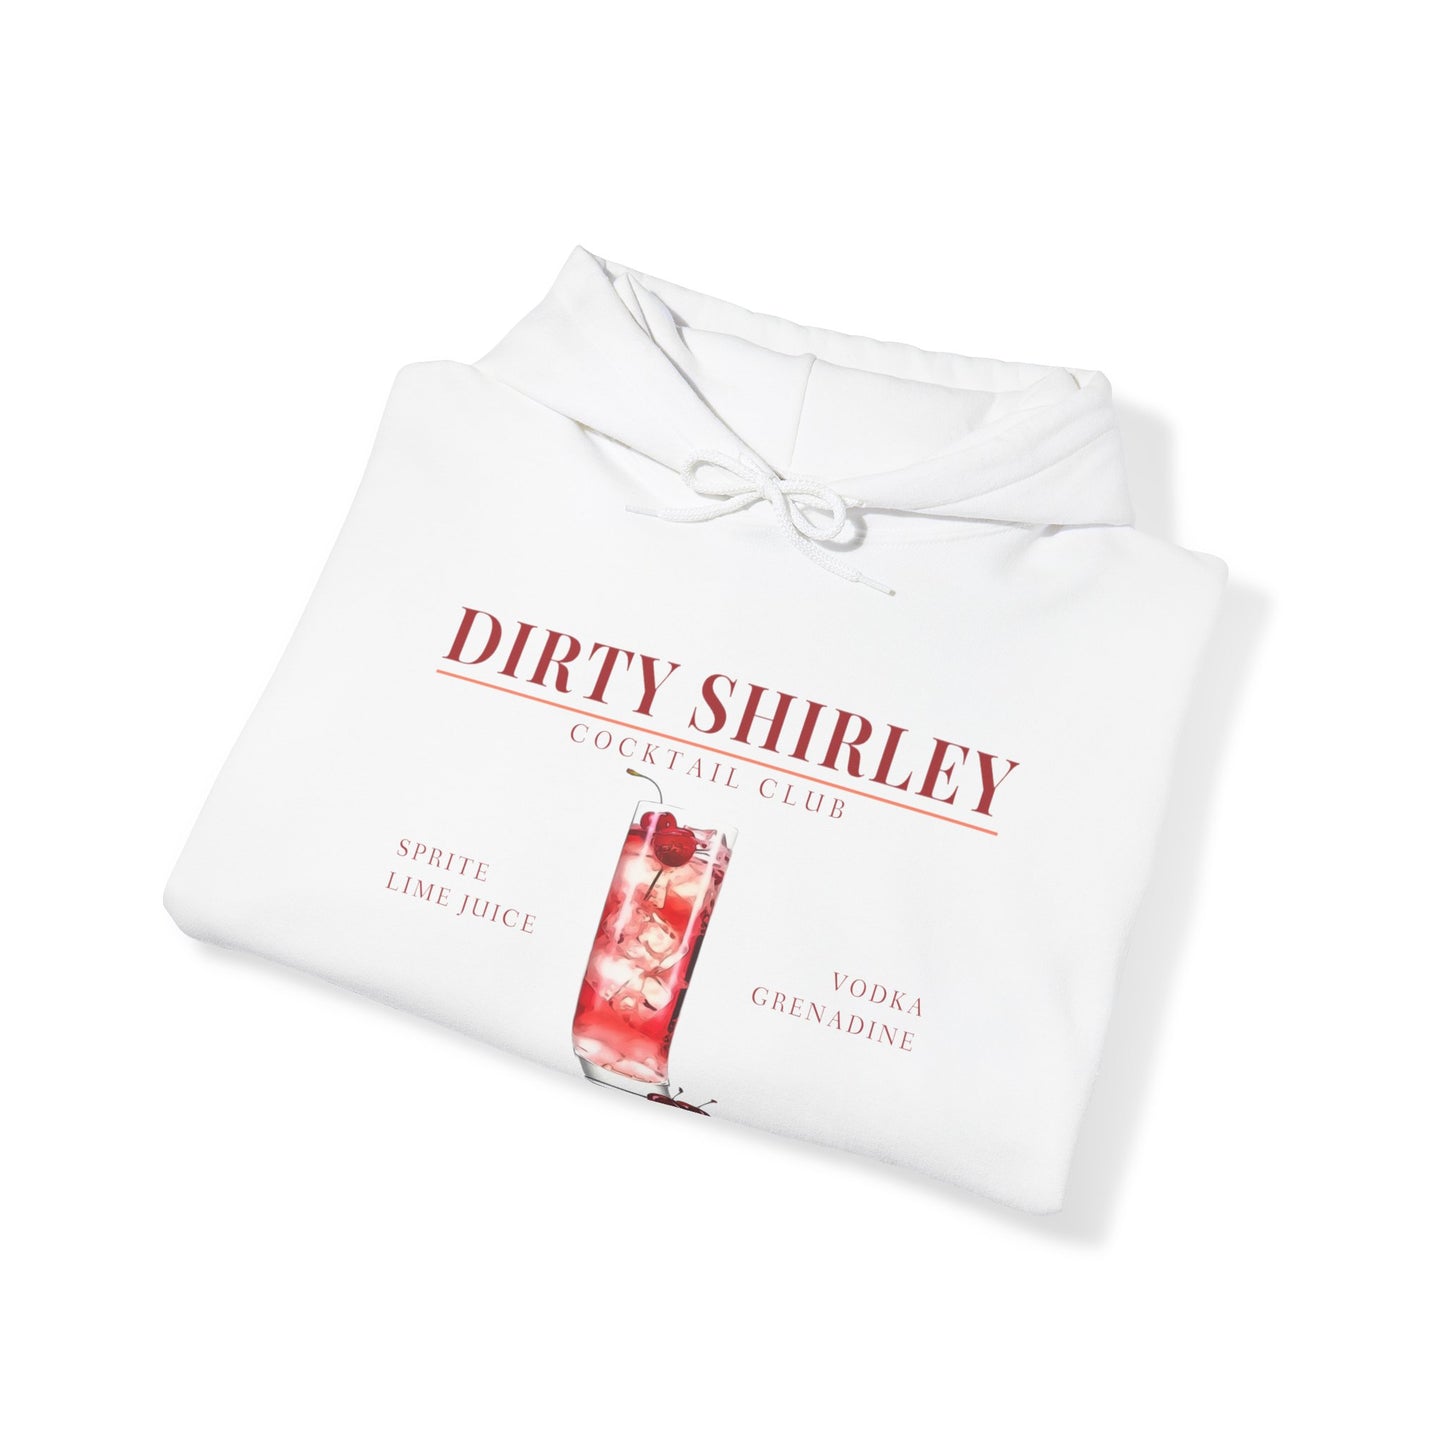 Dirty Shirley Cocktail Club Hooded Sweatshirt